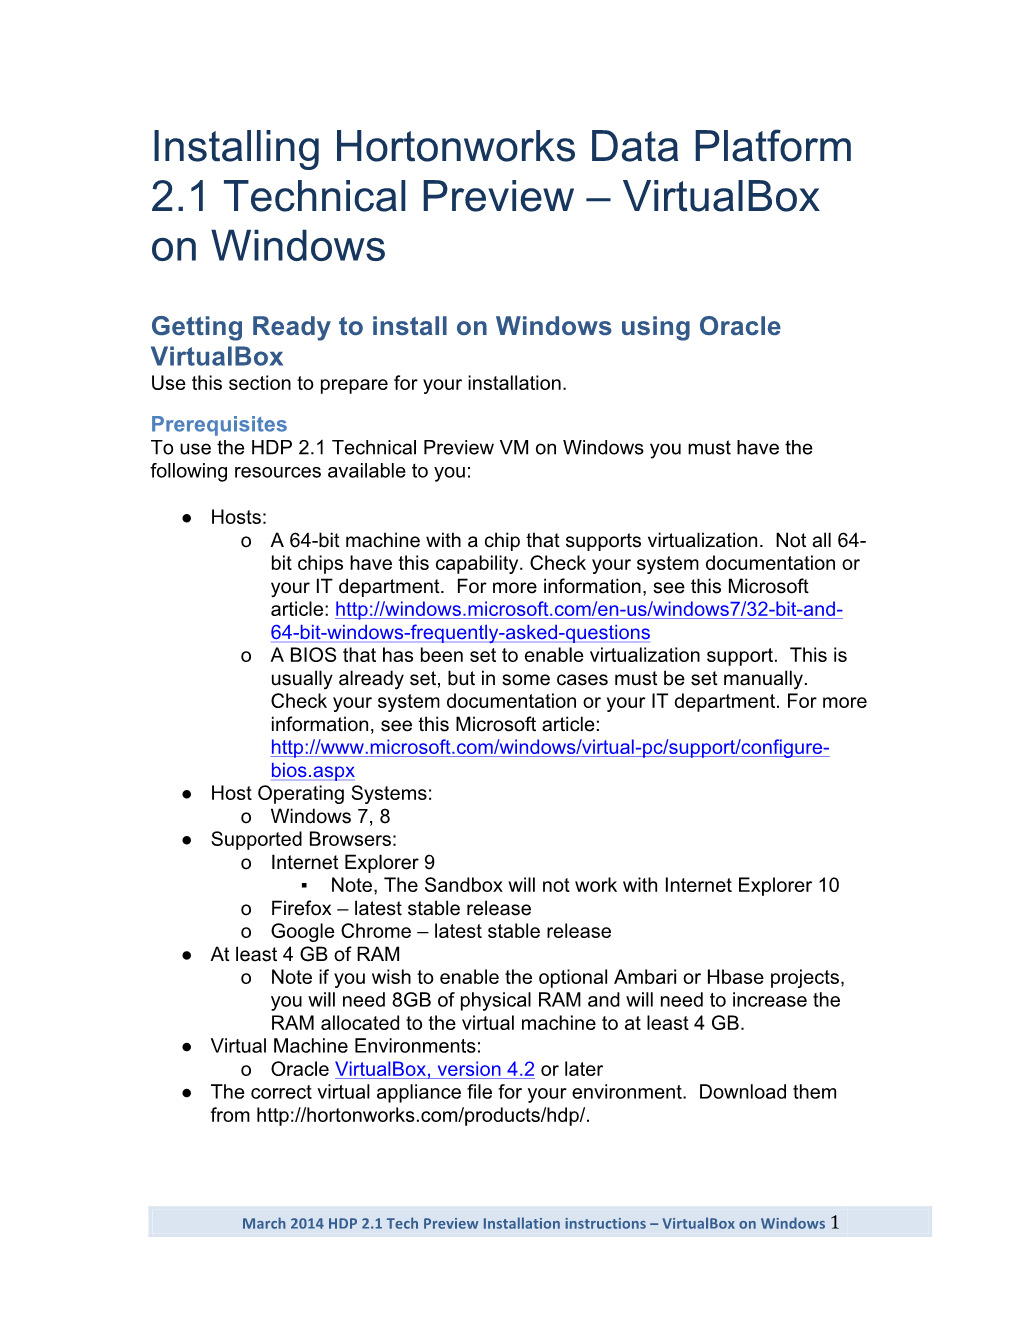 Installing Hortonworks Data Platform 2.1 Technical Preview – Virtualbox on Windows